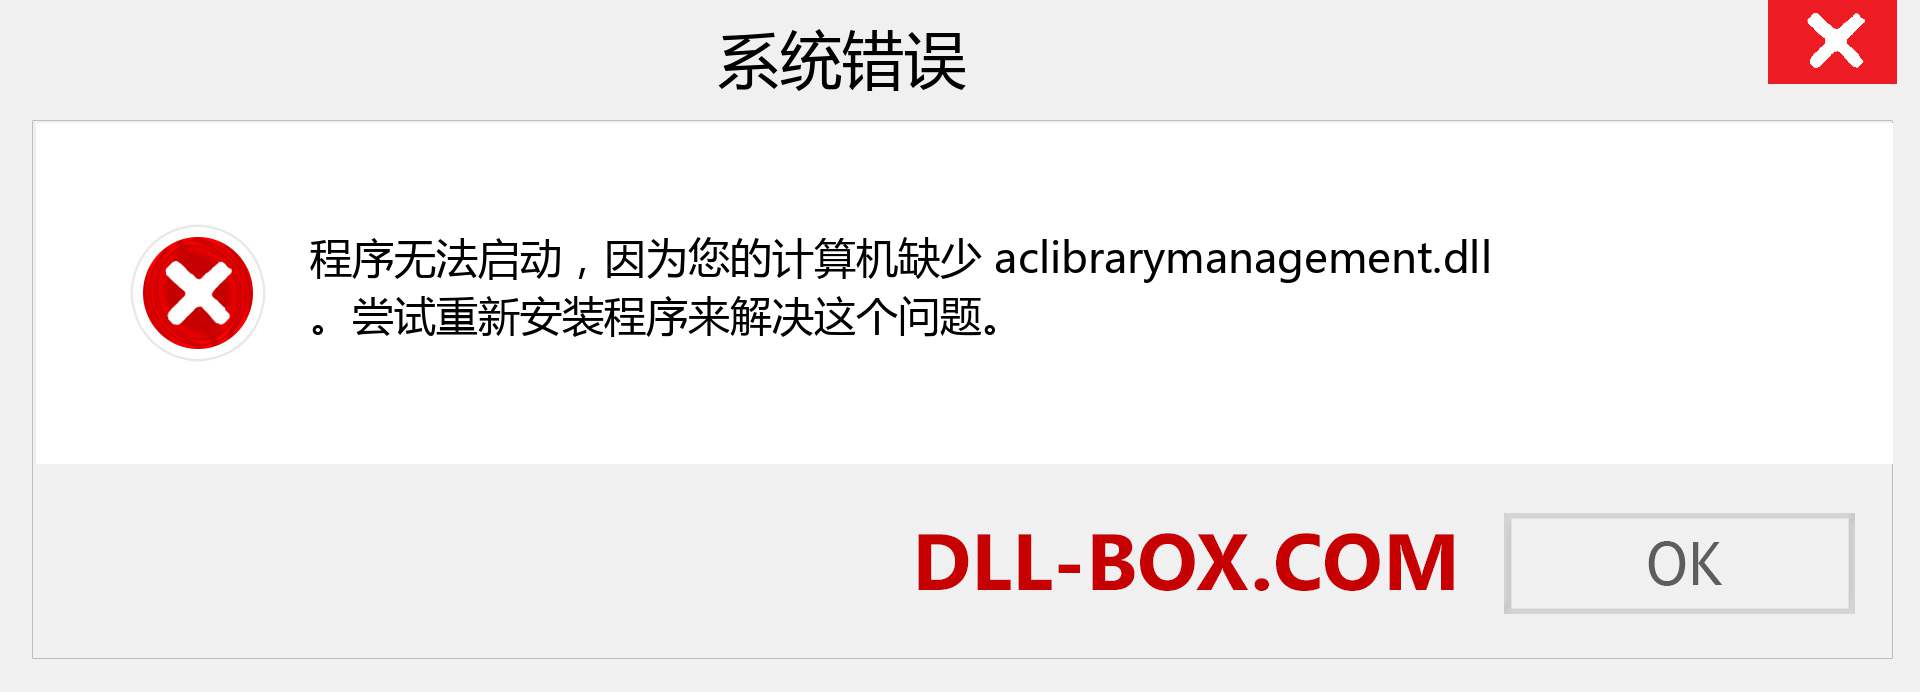 aclibrarymanagement.dll 文件丢失？。 适用于 Windows 7、8、10 的下载 - 修复 Windows、照片、图像上的 aclibrarymanagement dll 丢失错误